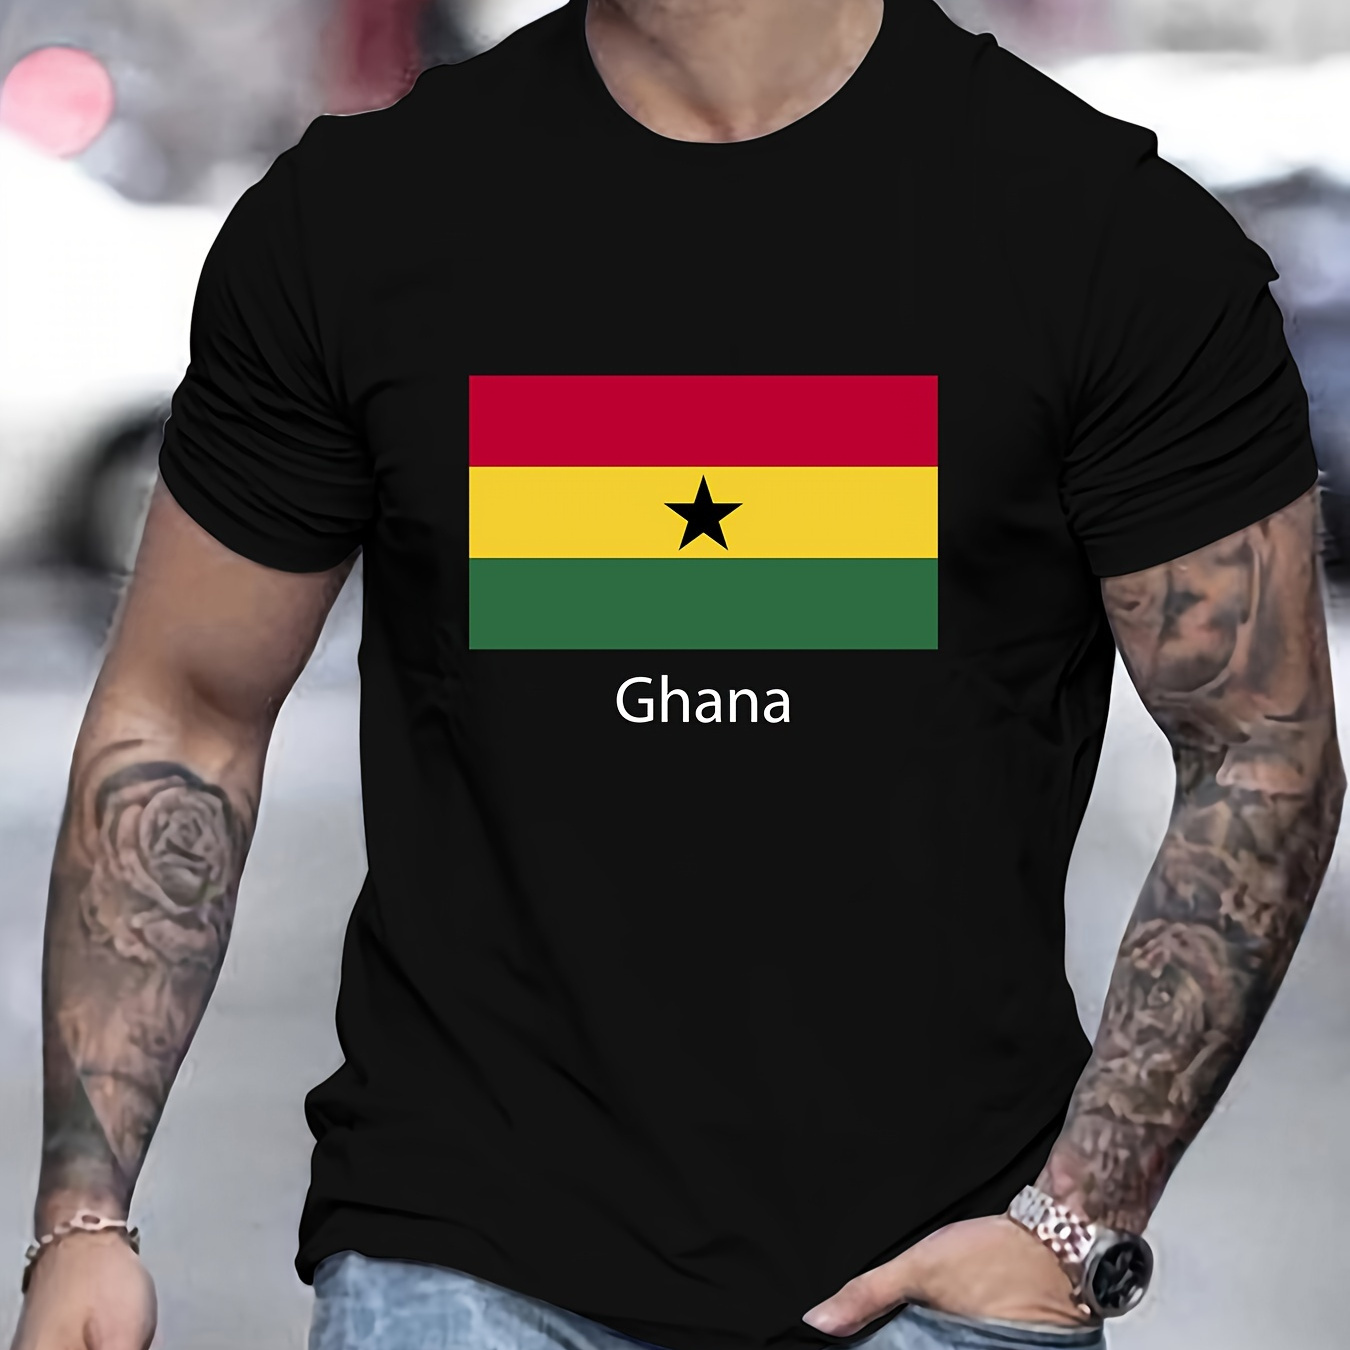 

Ghana Flag Pattern Print Tee Shirt, Tees For Men, Casual Short Sleeve T-shirt For Summer